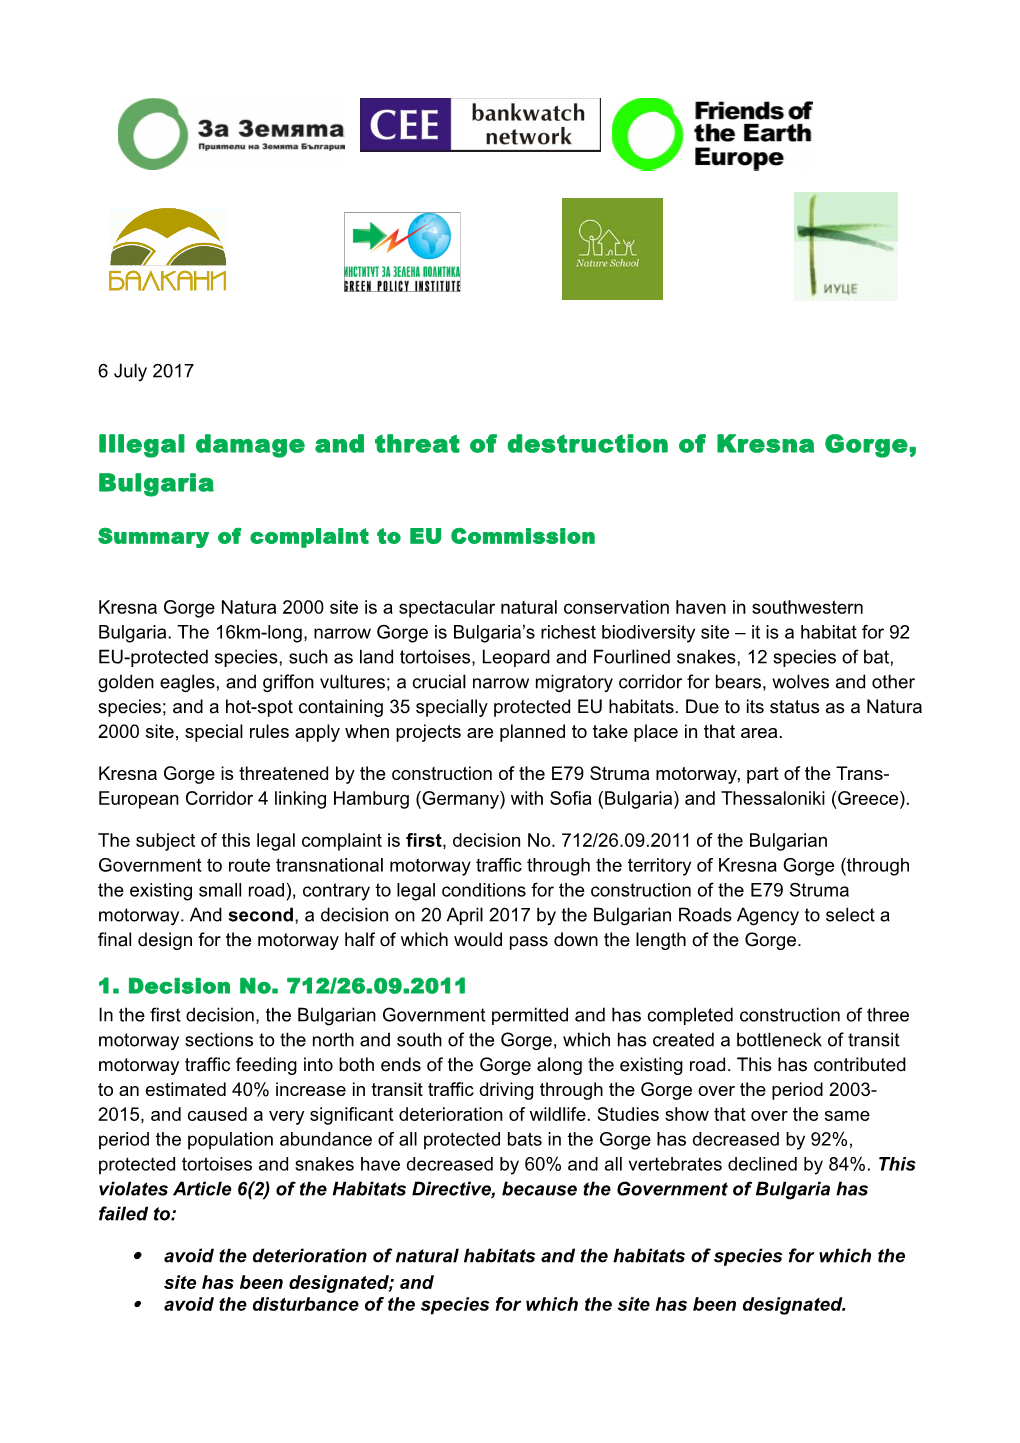 Illegal Damage and Threat of Destruction of Kresna Gorge, Bulgaria